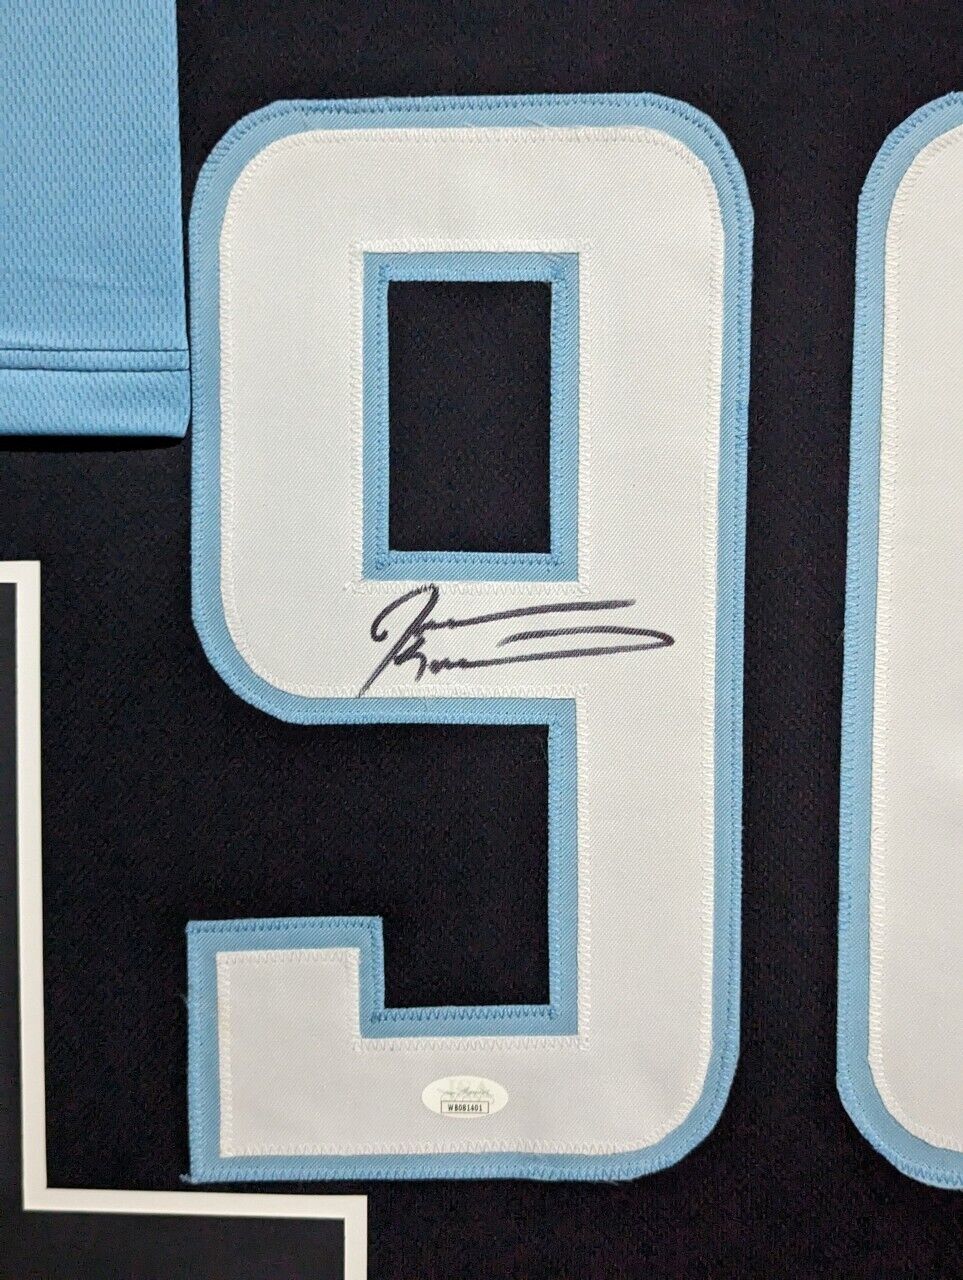 MVP Authentics Framed Tennessee Titans Jevon Kearse Autographed Signed Jersey Jsa Coa 472.50 sports jersey framing , jersey framing